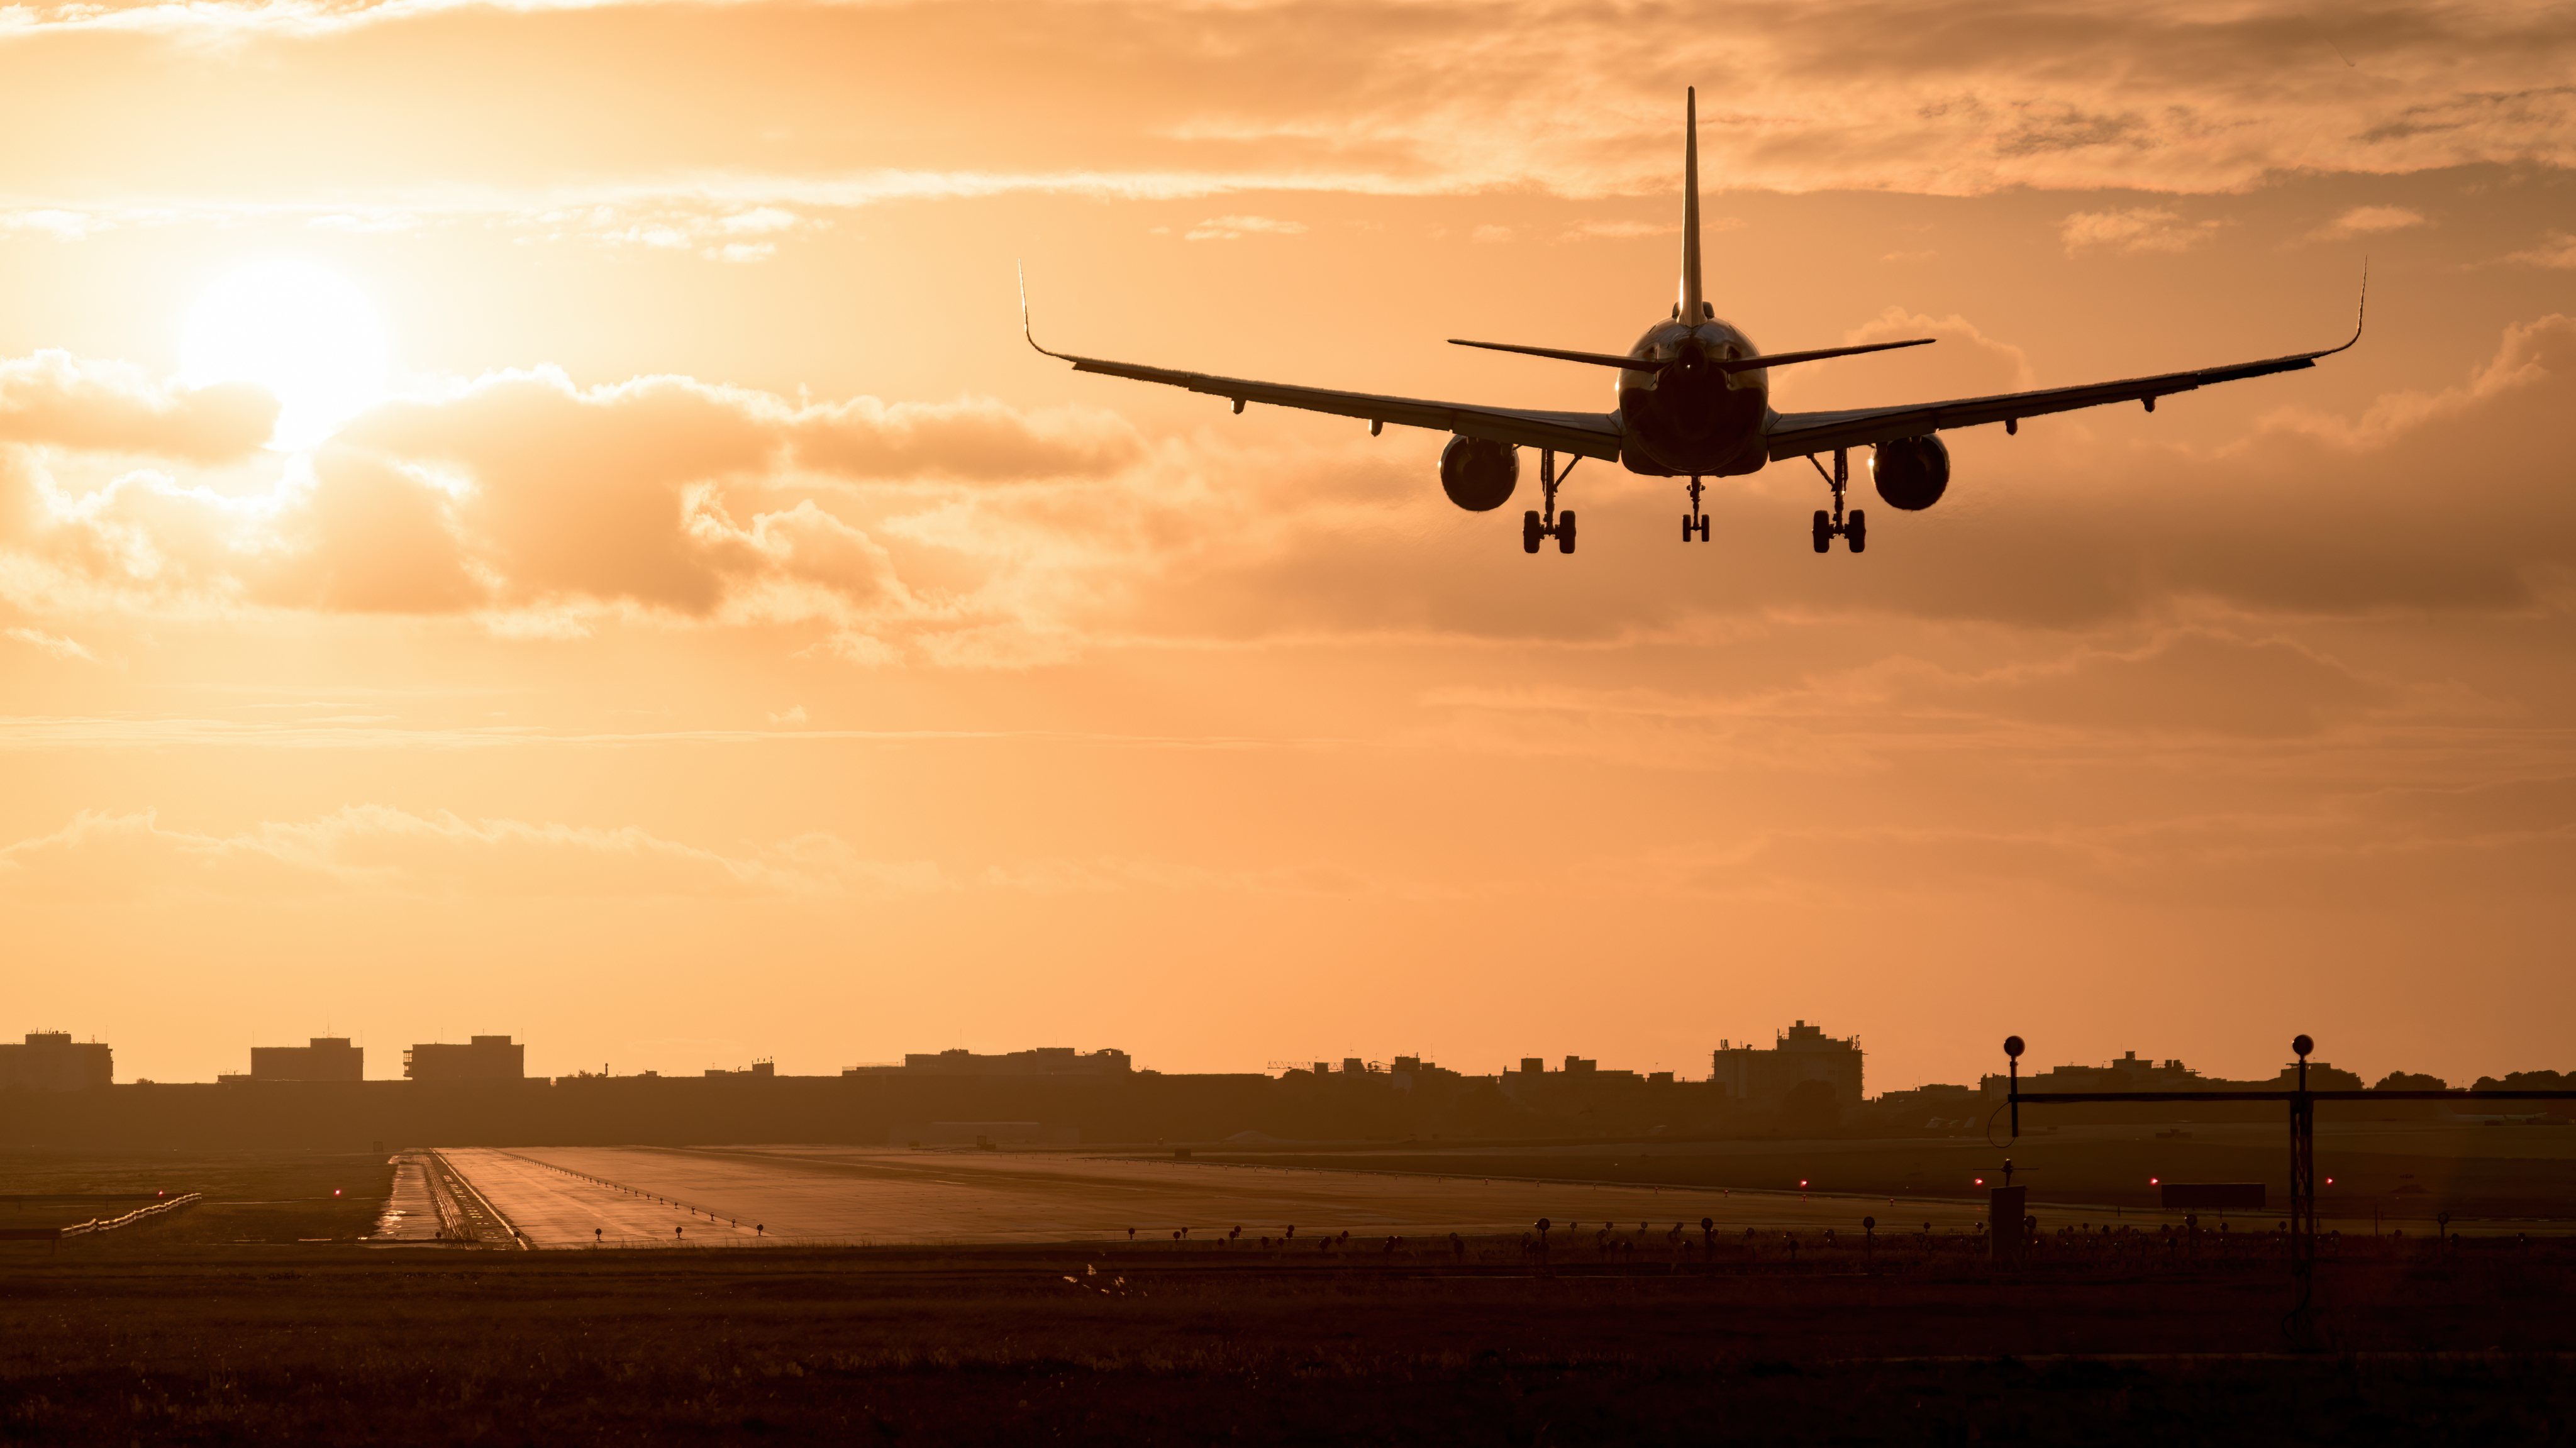 Airplane landing at sunset, sunsets background, travel background